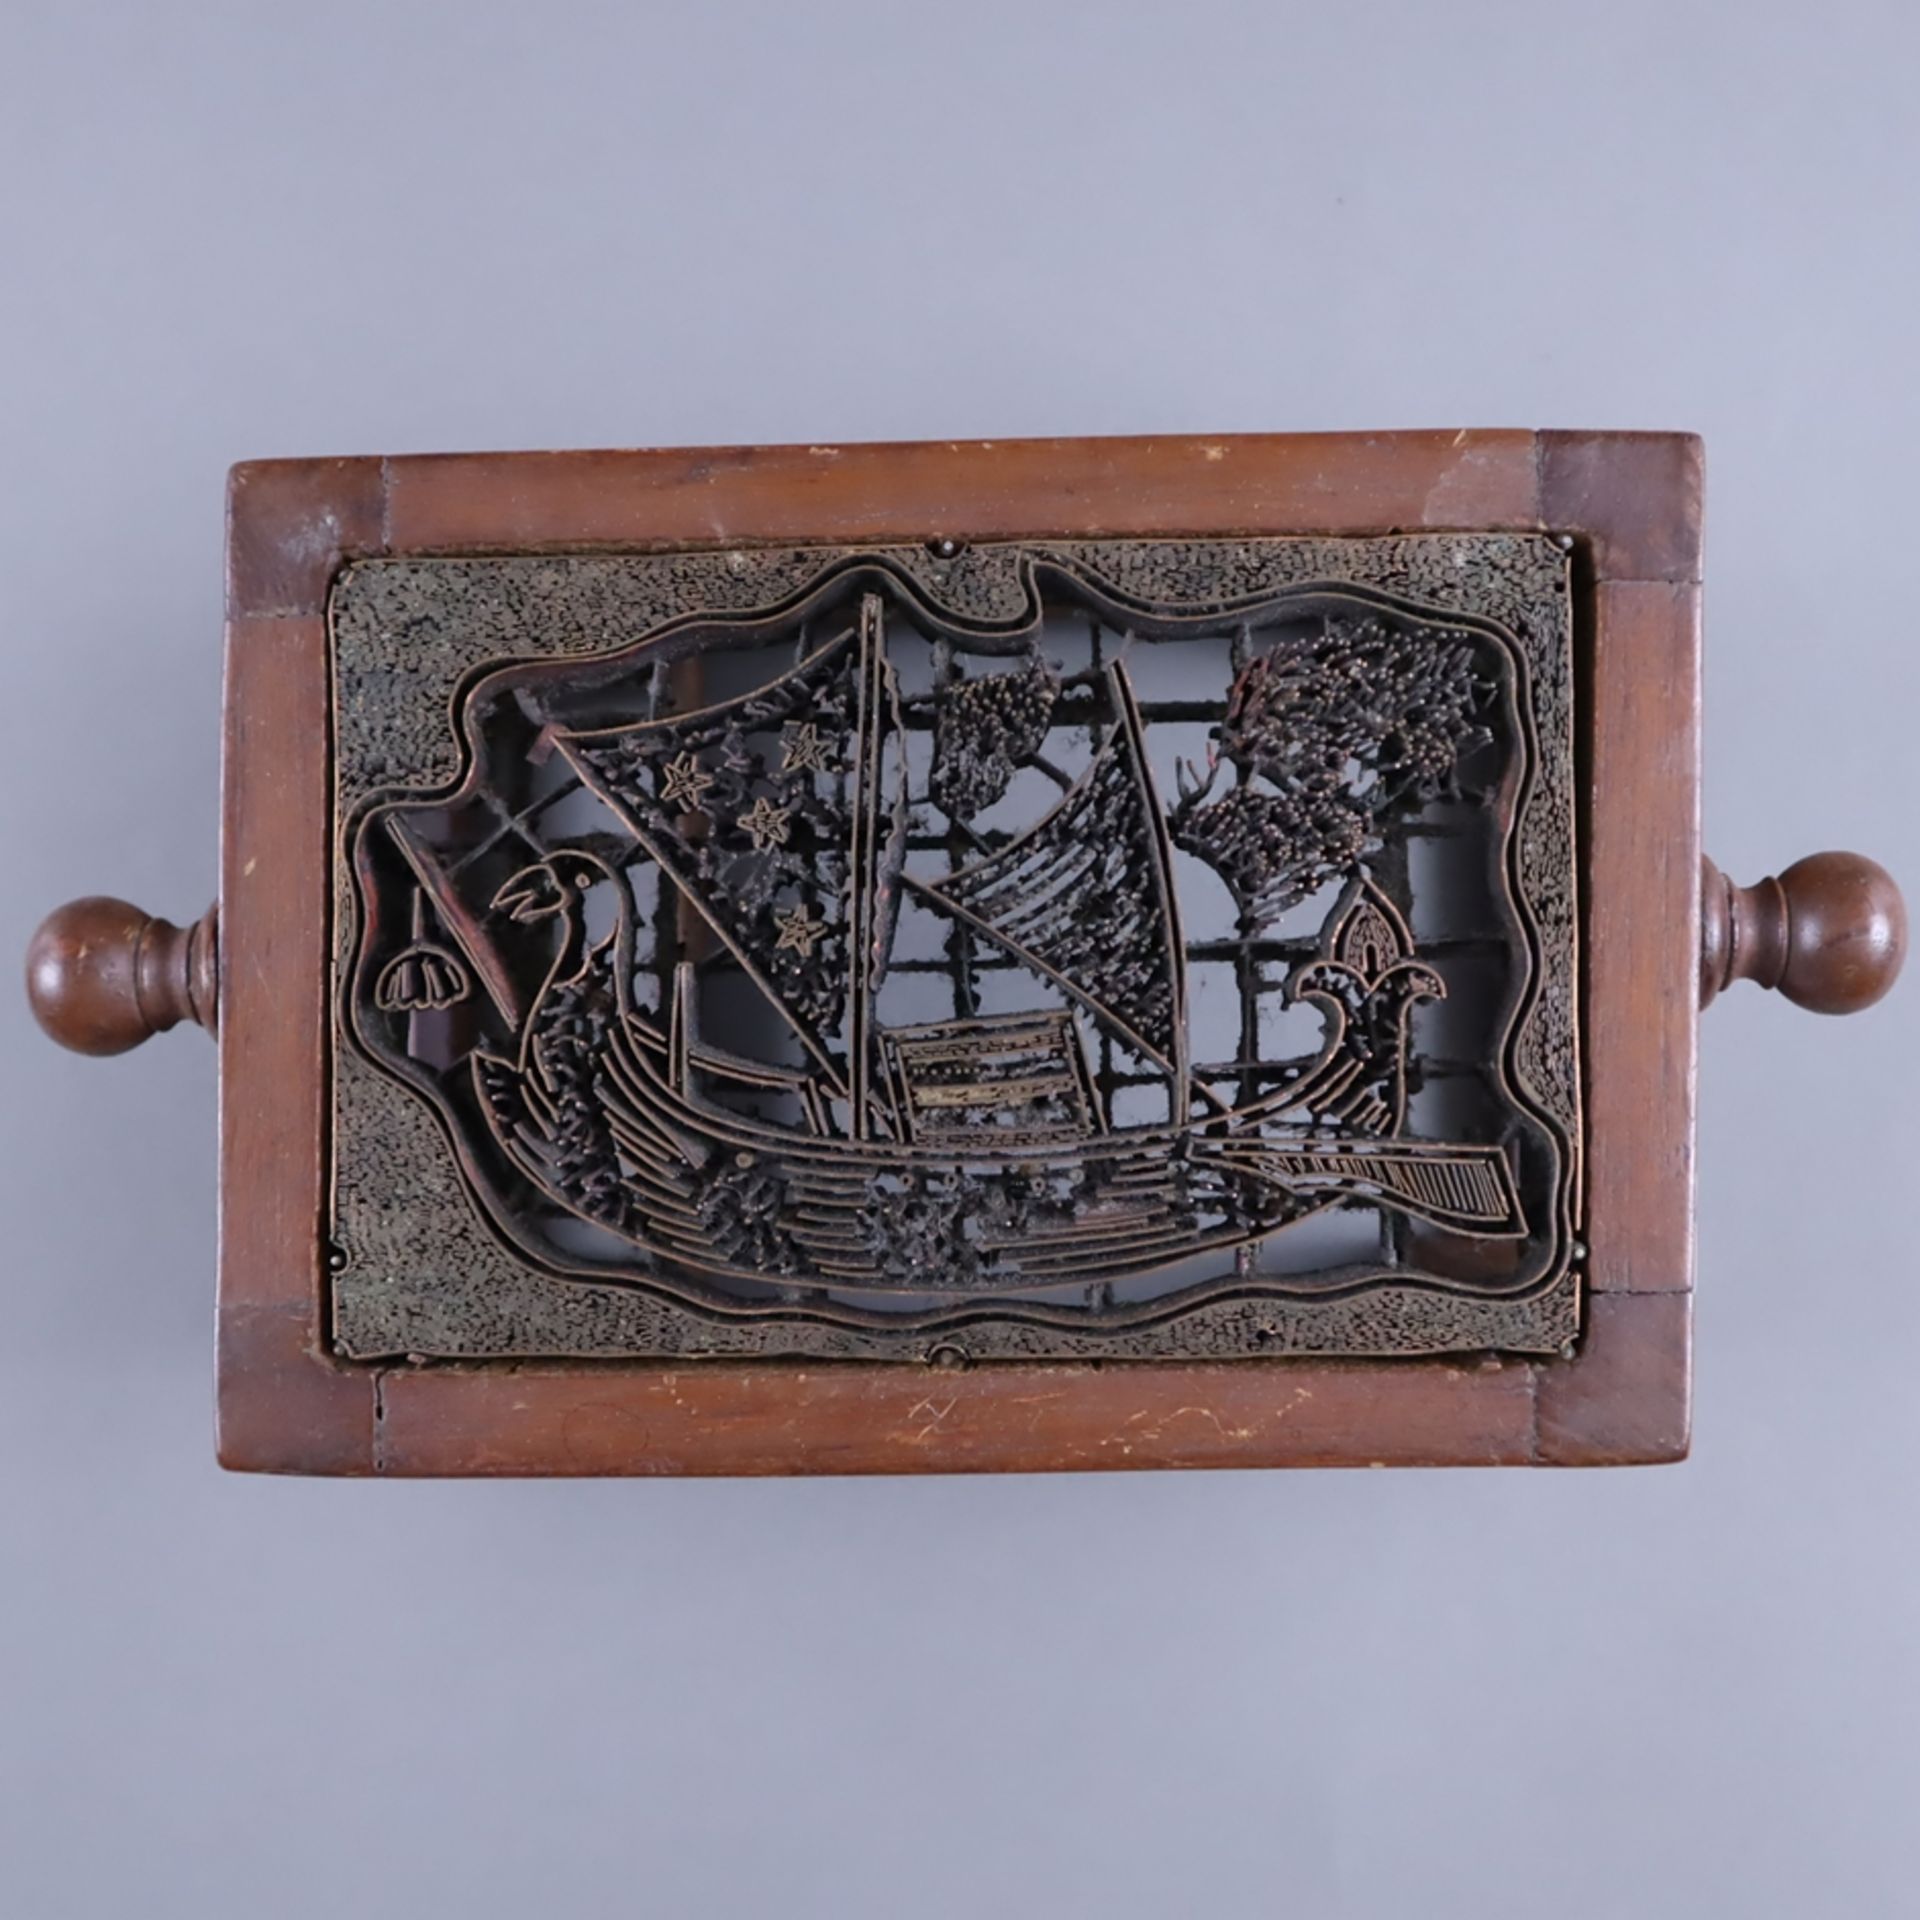 Zwei große Batikstempel - Indonesien, Holz / Kupfer, rechteckige Form, durchbrochen gearbeitet, Mot - Image 3 of 4